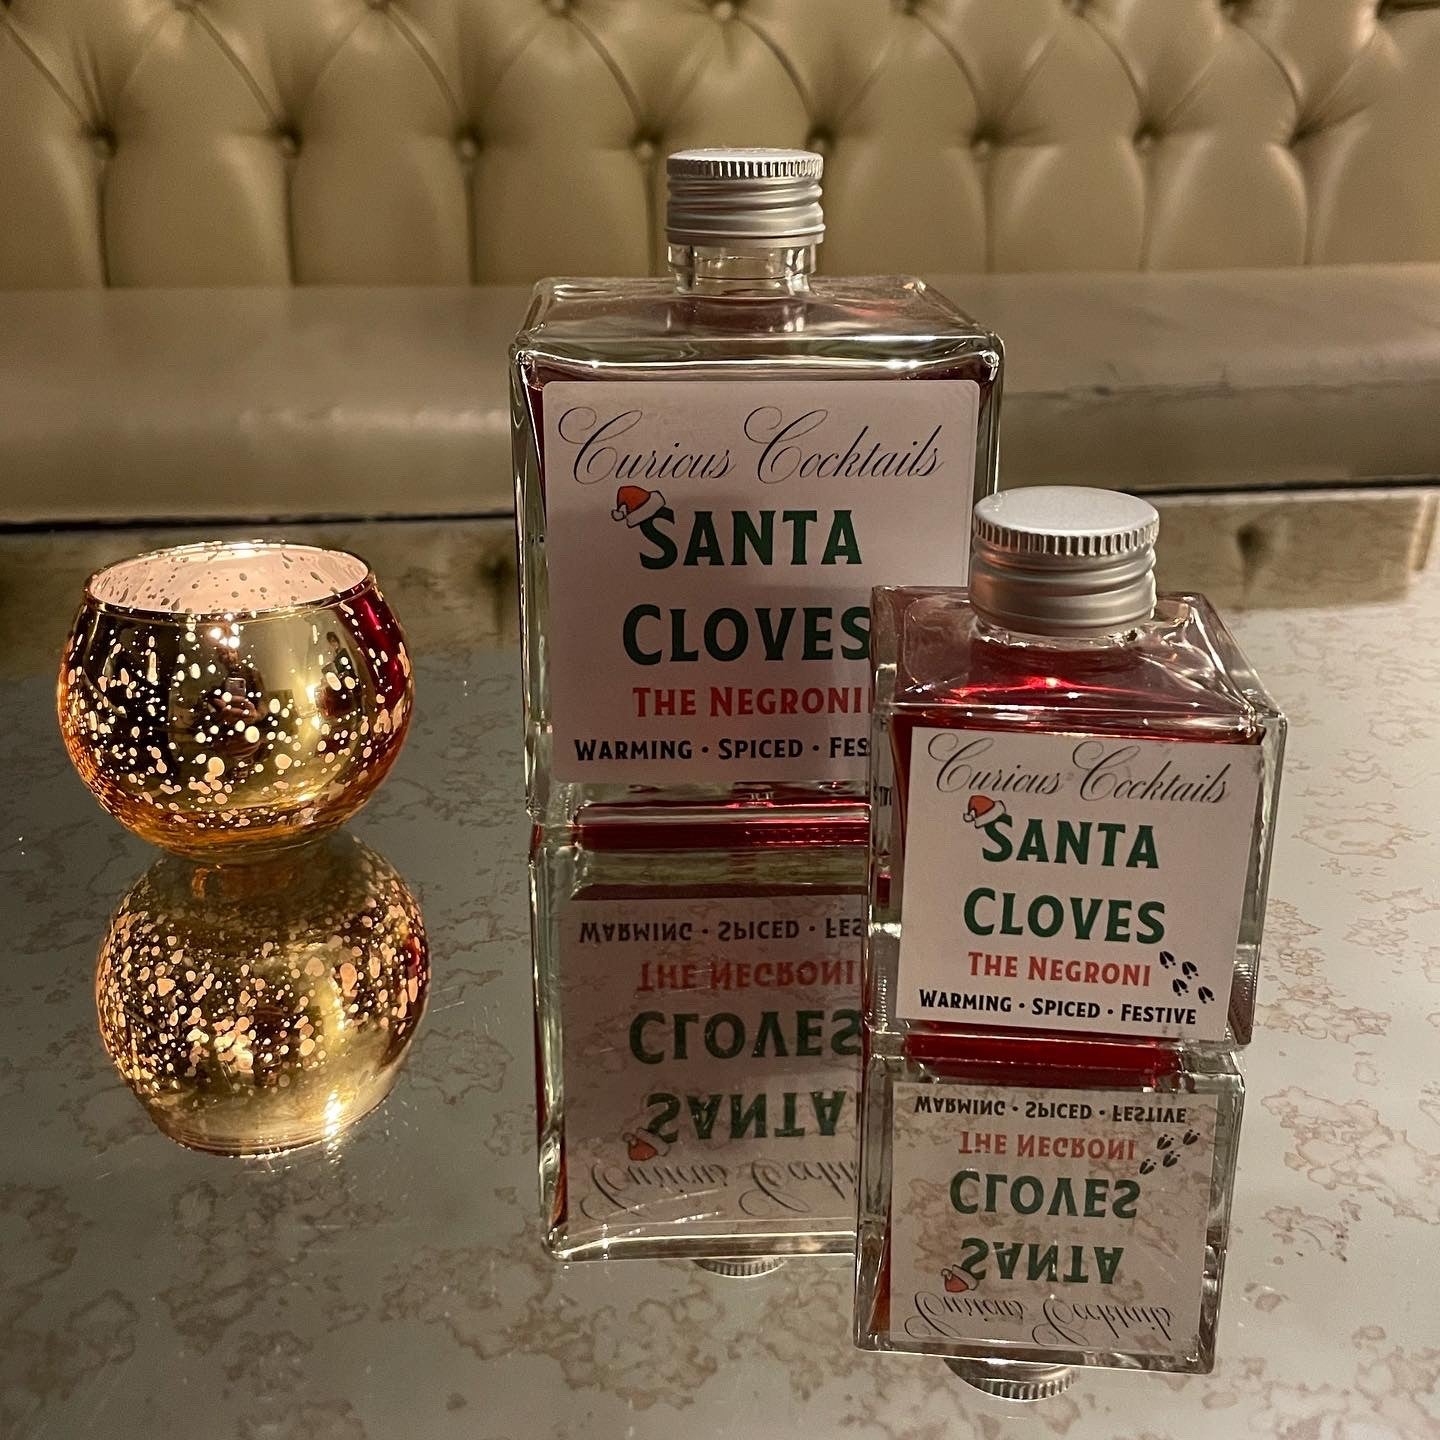 Curious Cocktails: Santa Cloves The Negroni